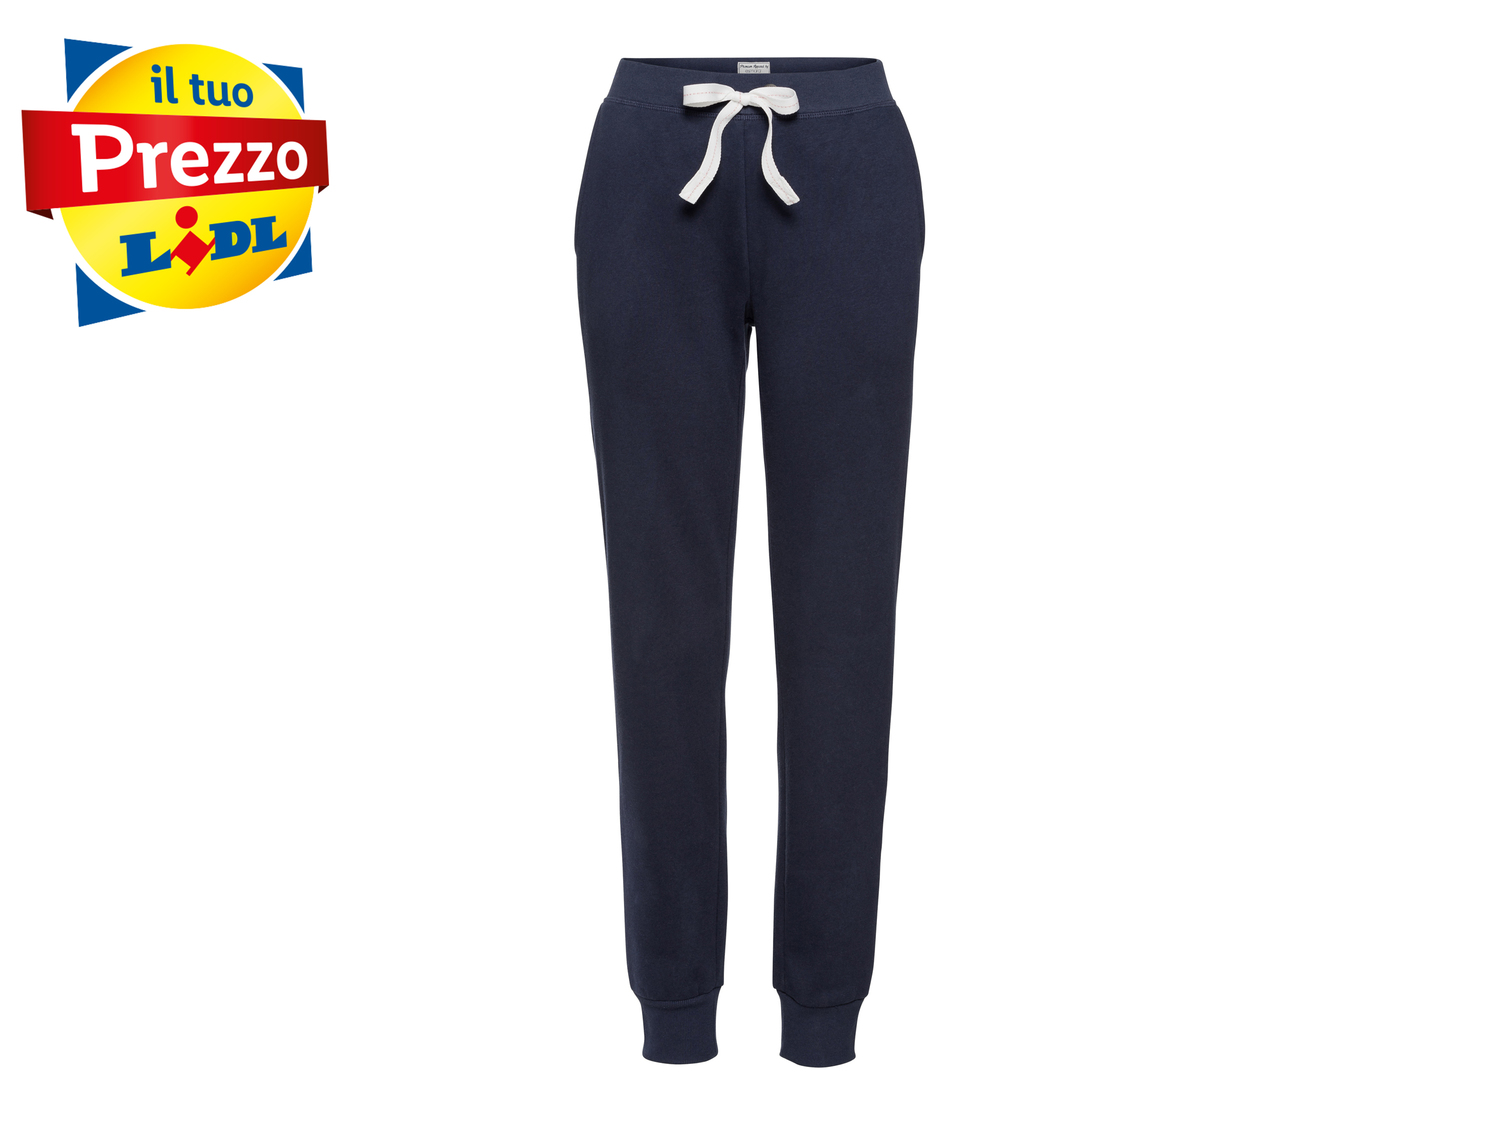 Pantaloni sportivi da donna Esmara, prezzo 11.99 &#8364;  
Misure: XS-L
- Oeko tex NEW